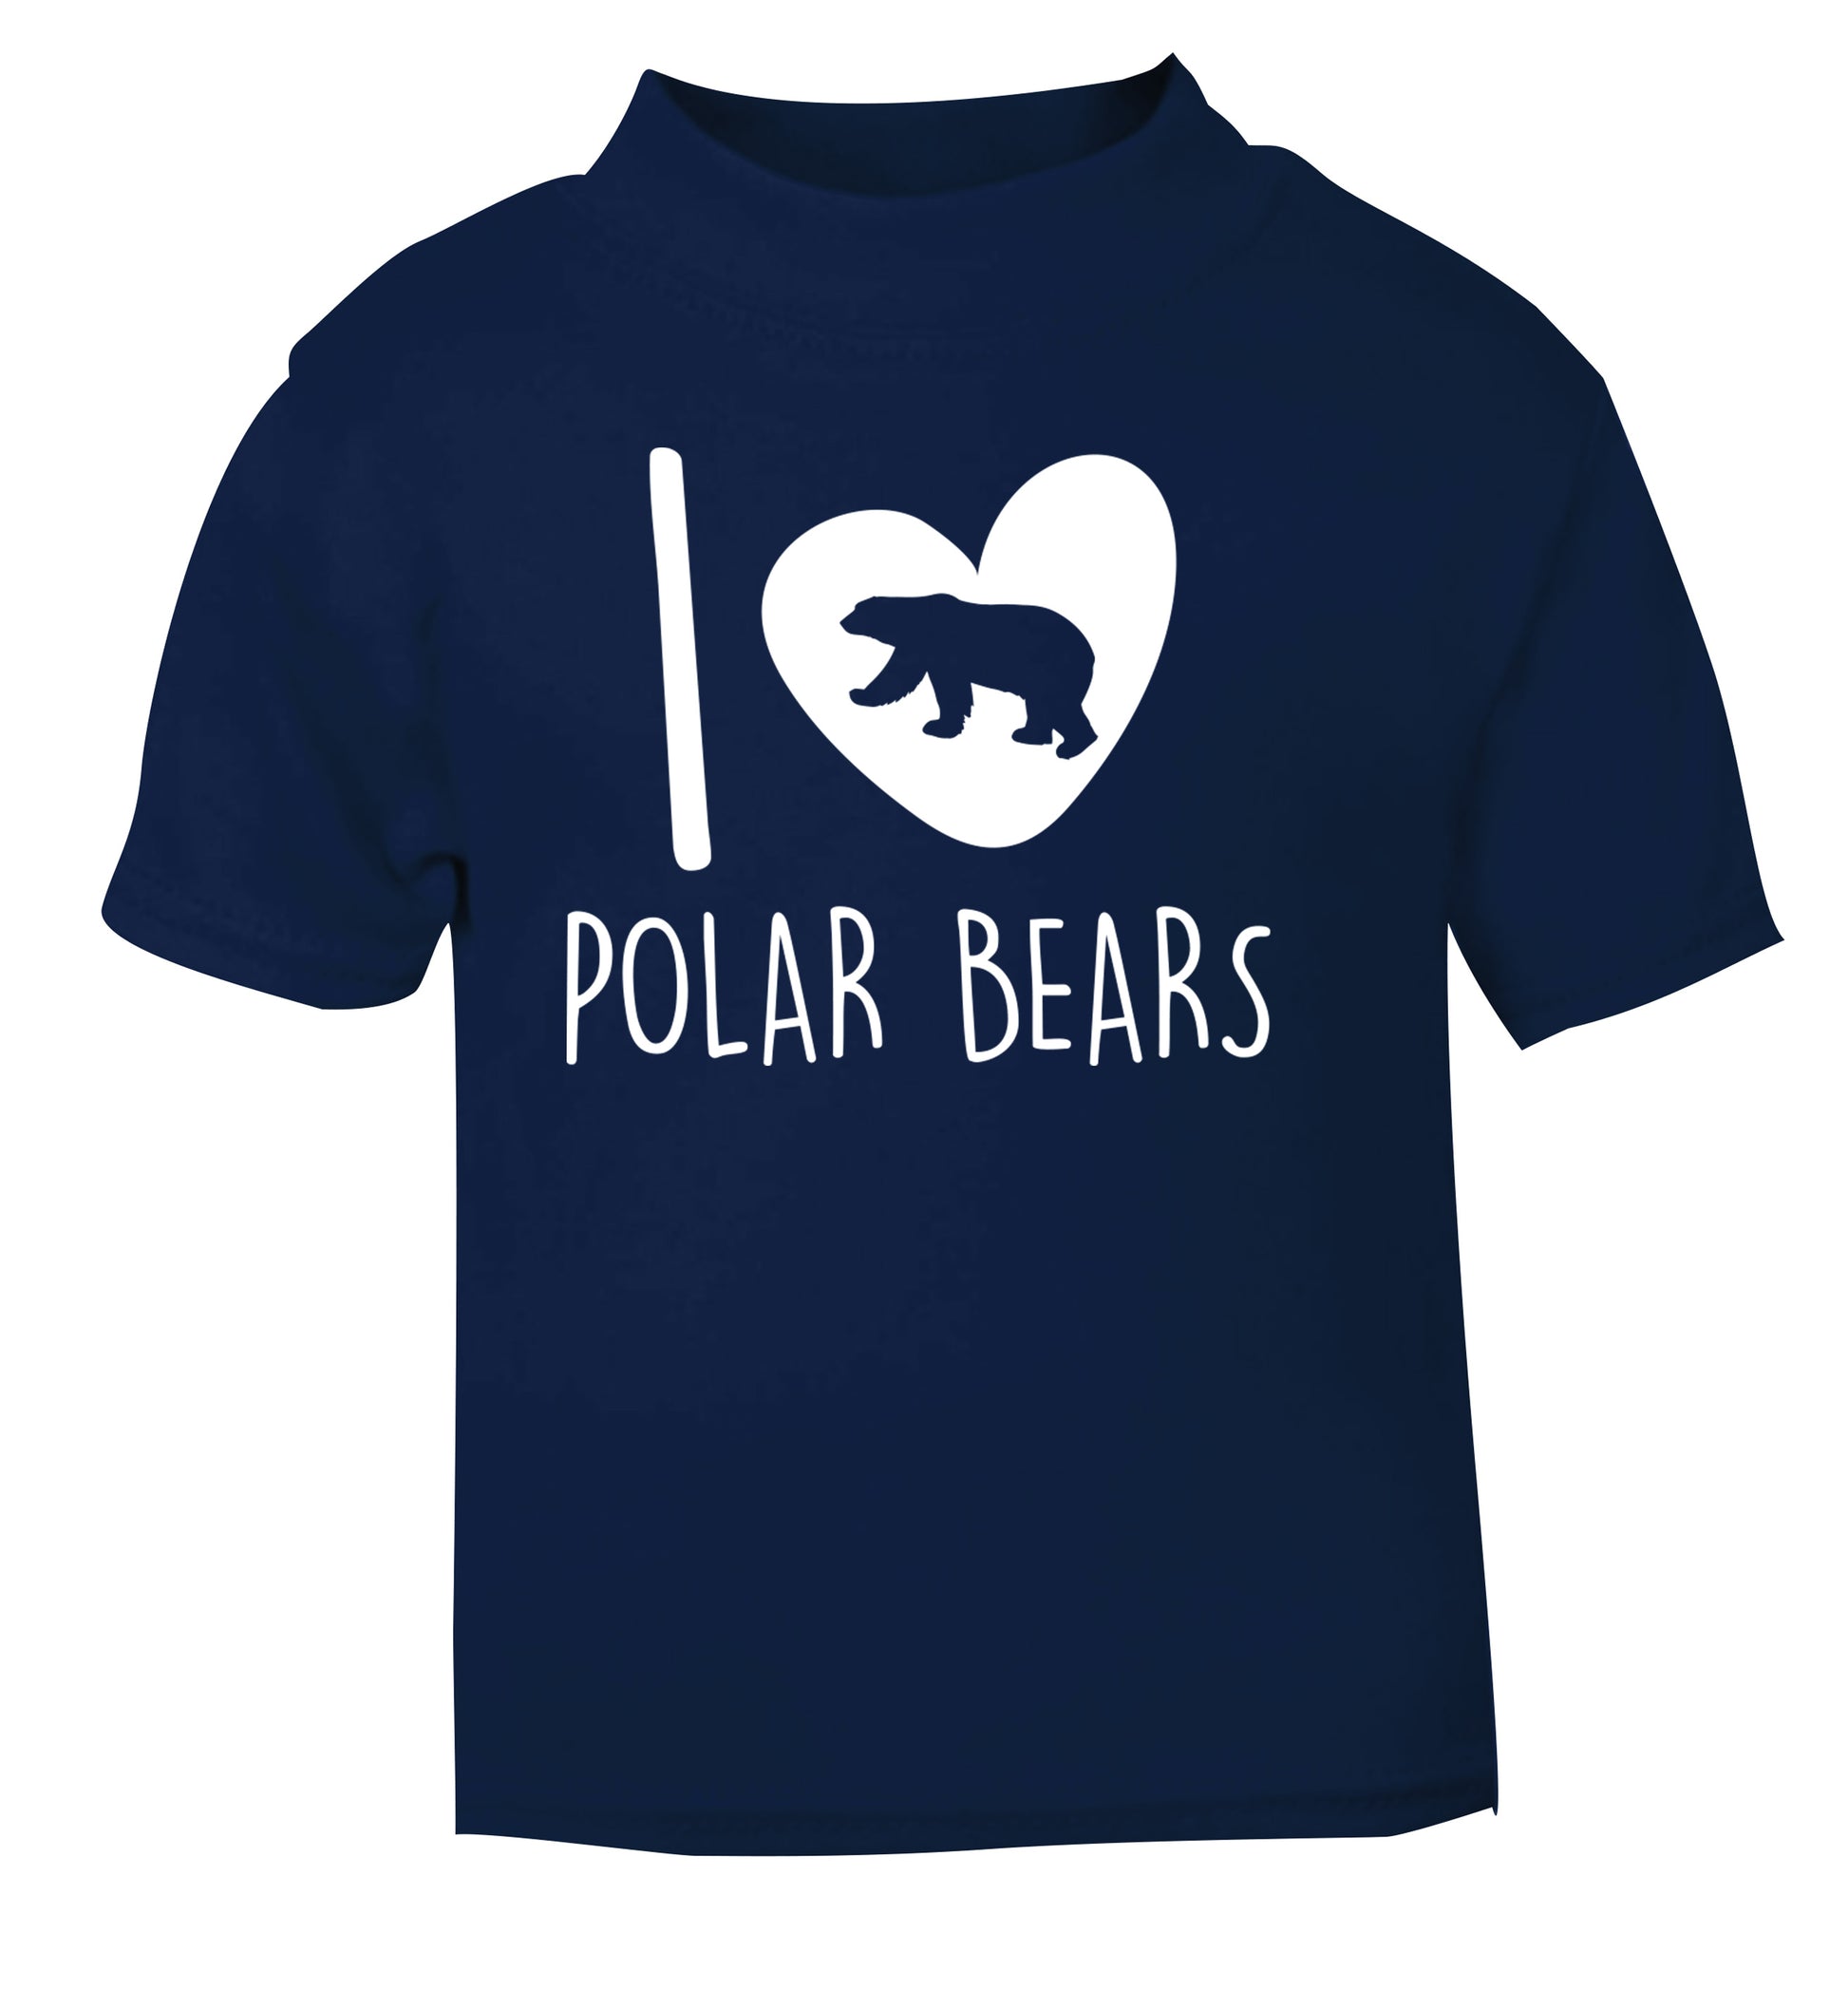 I Love Polar Bears navy Baby Toddler Tshirt 2 Years